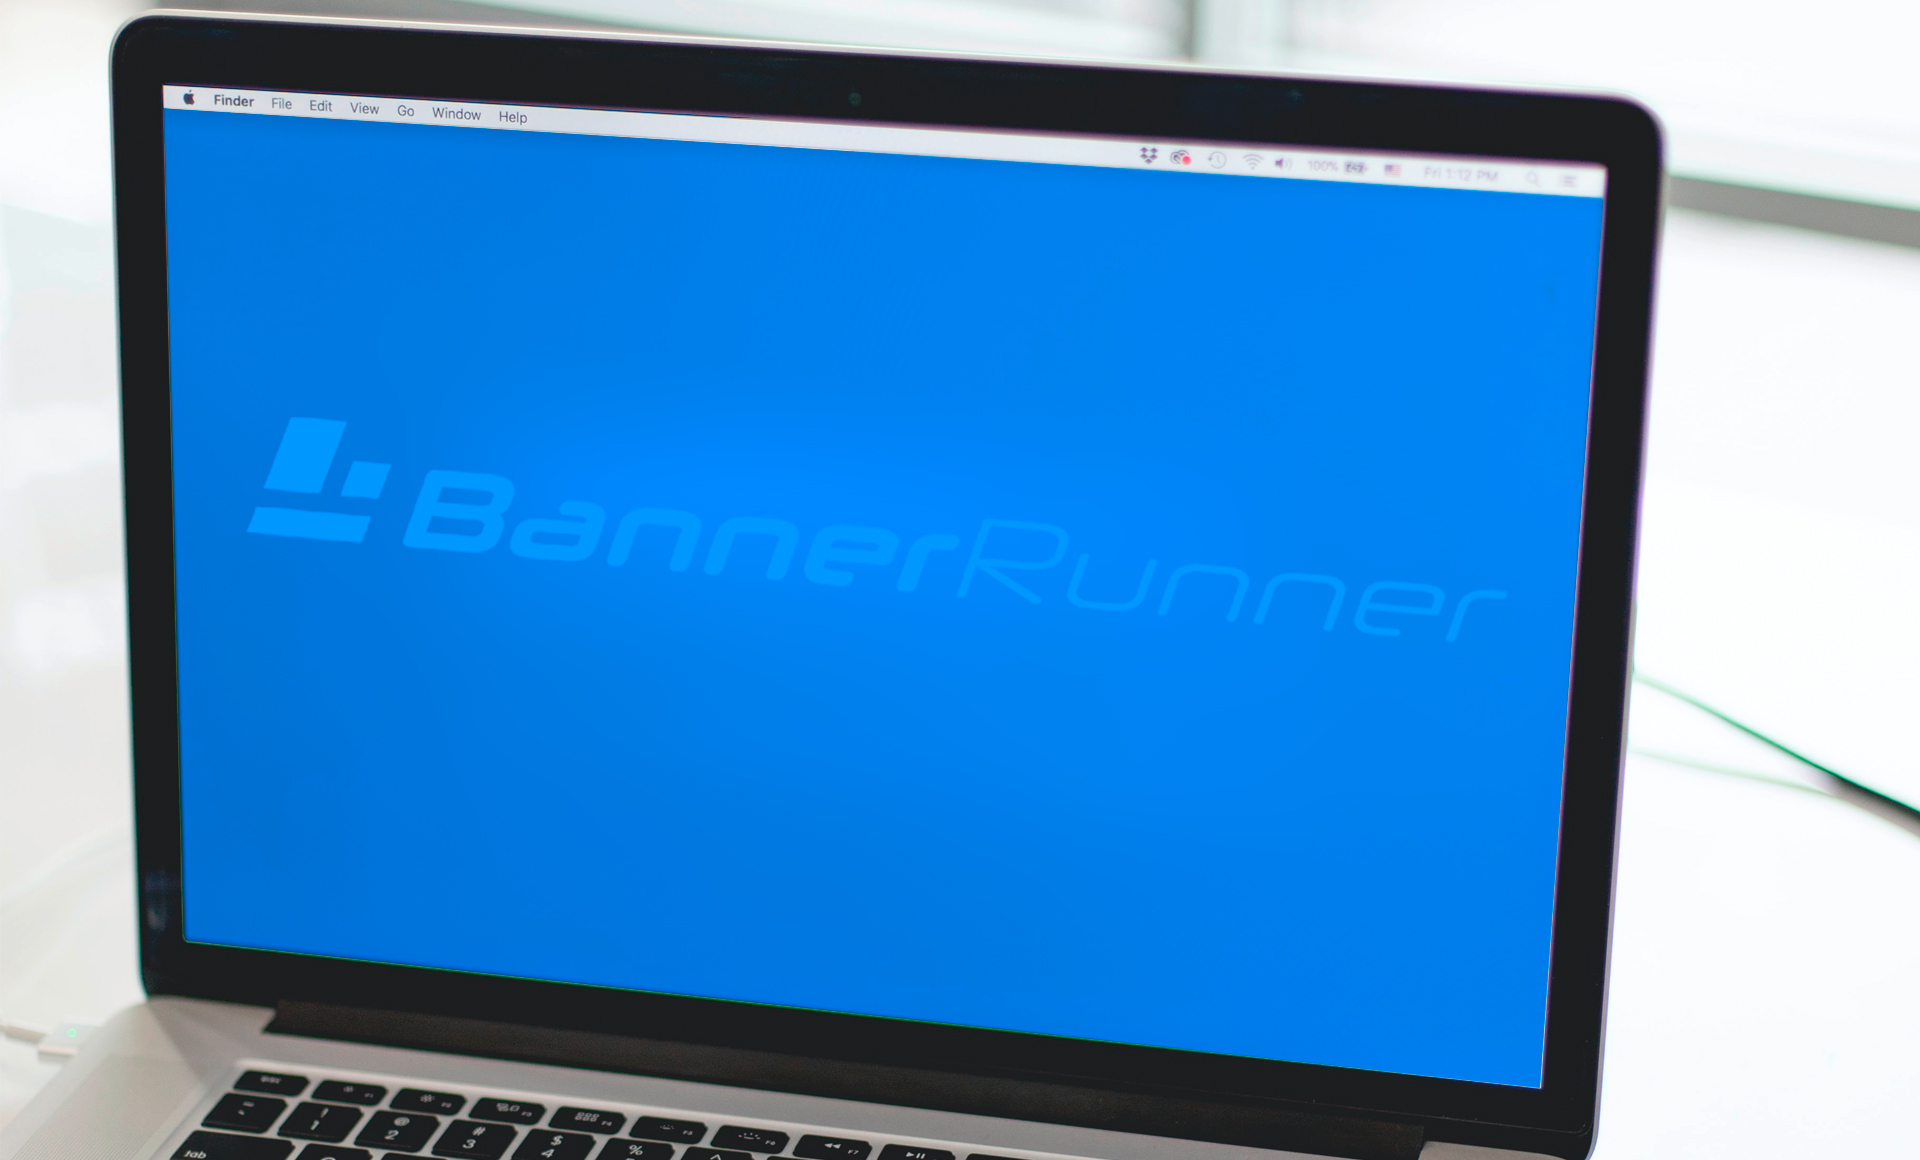 BannerRunner